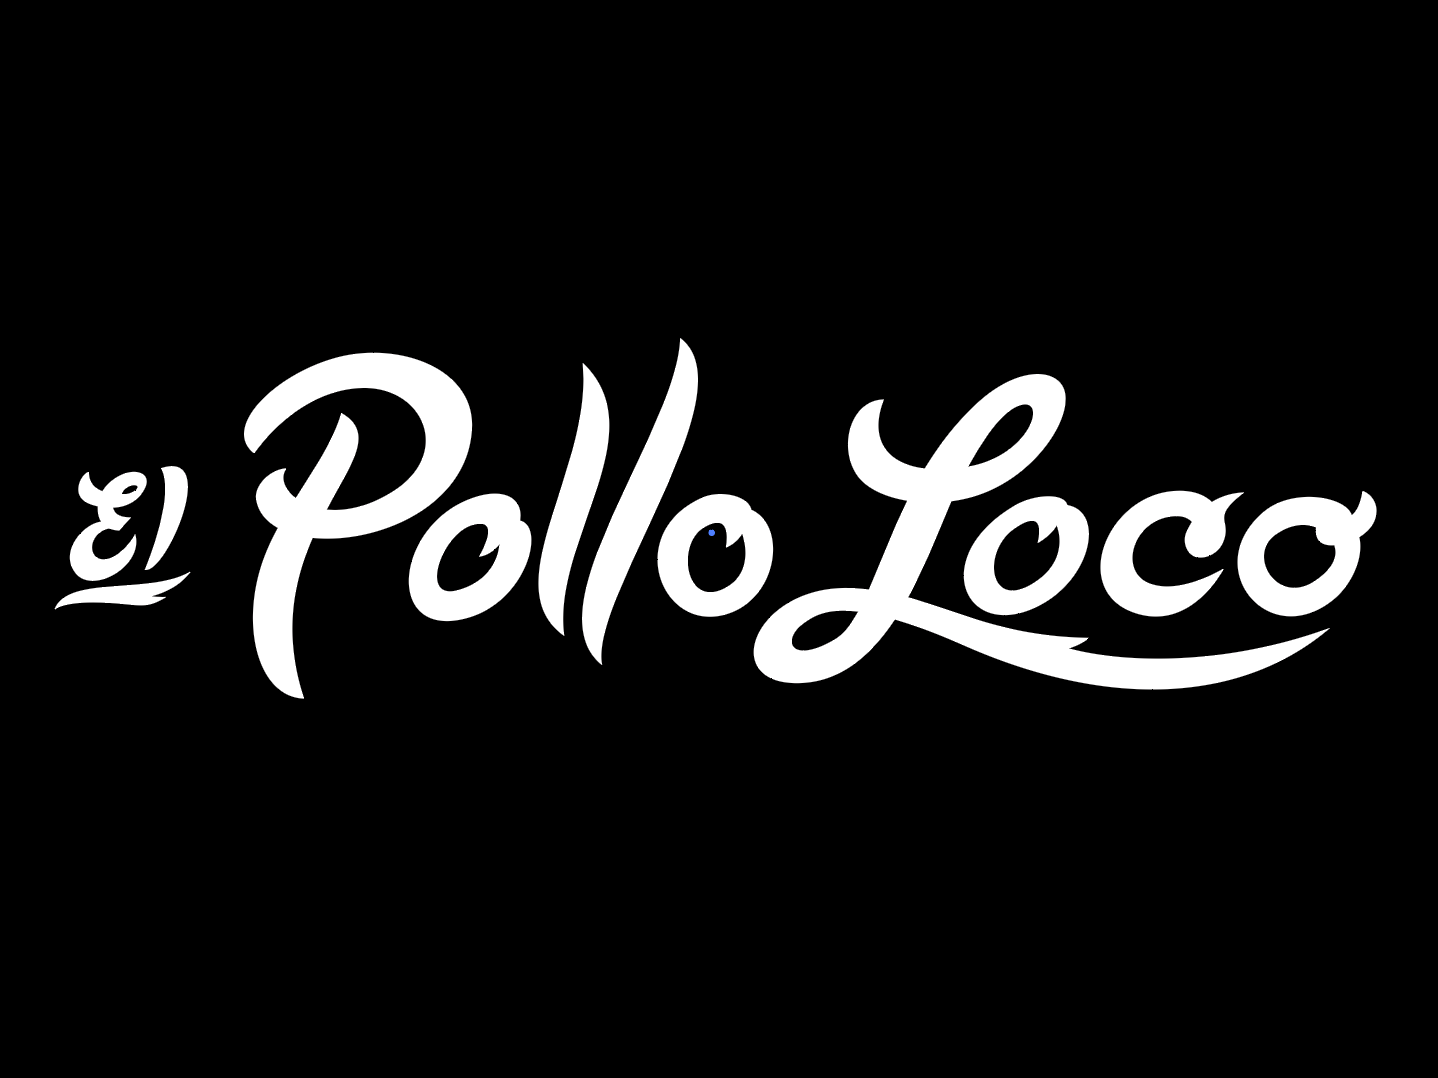 El Pollo Loco Logo Script by Drew Dougherty on Dribbble